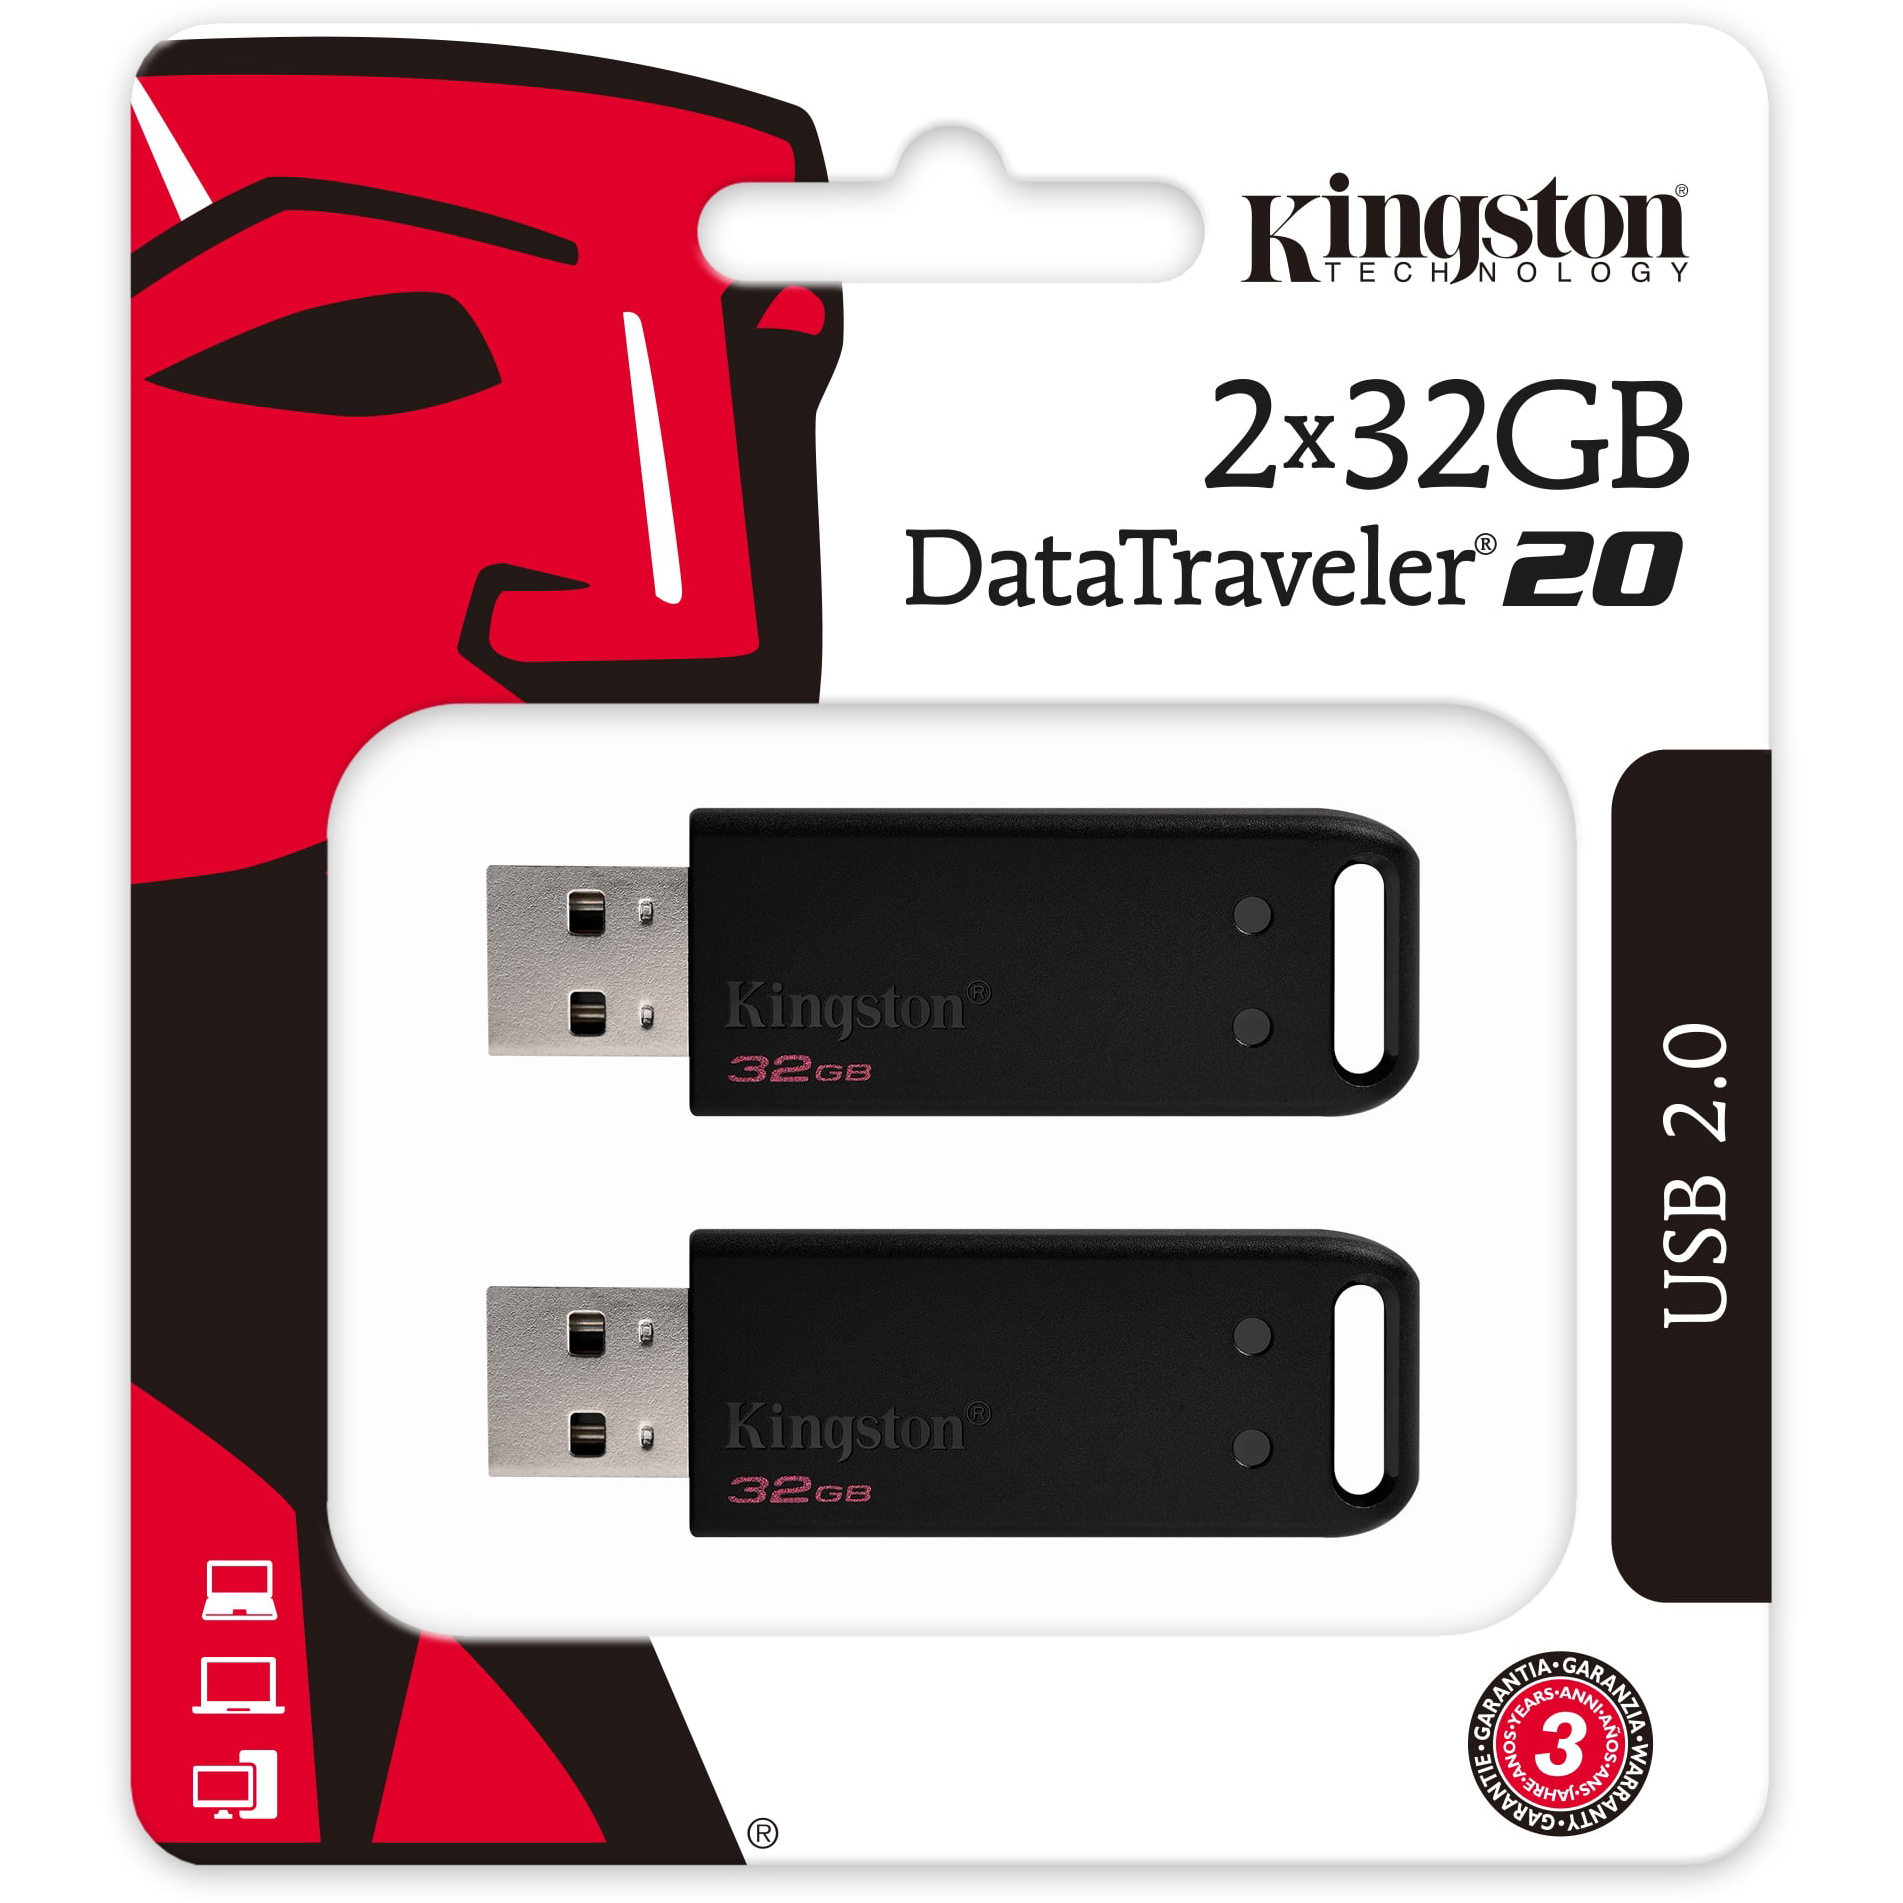 Original Kingston 32GB DataTraveler 20 USB 2.0 Flash Drive 2-Pack (DT20/32GB-2P)